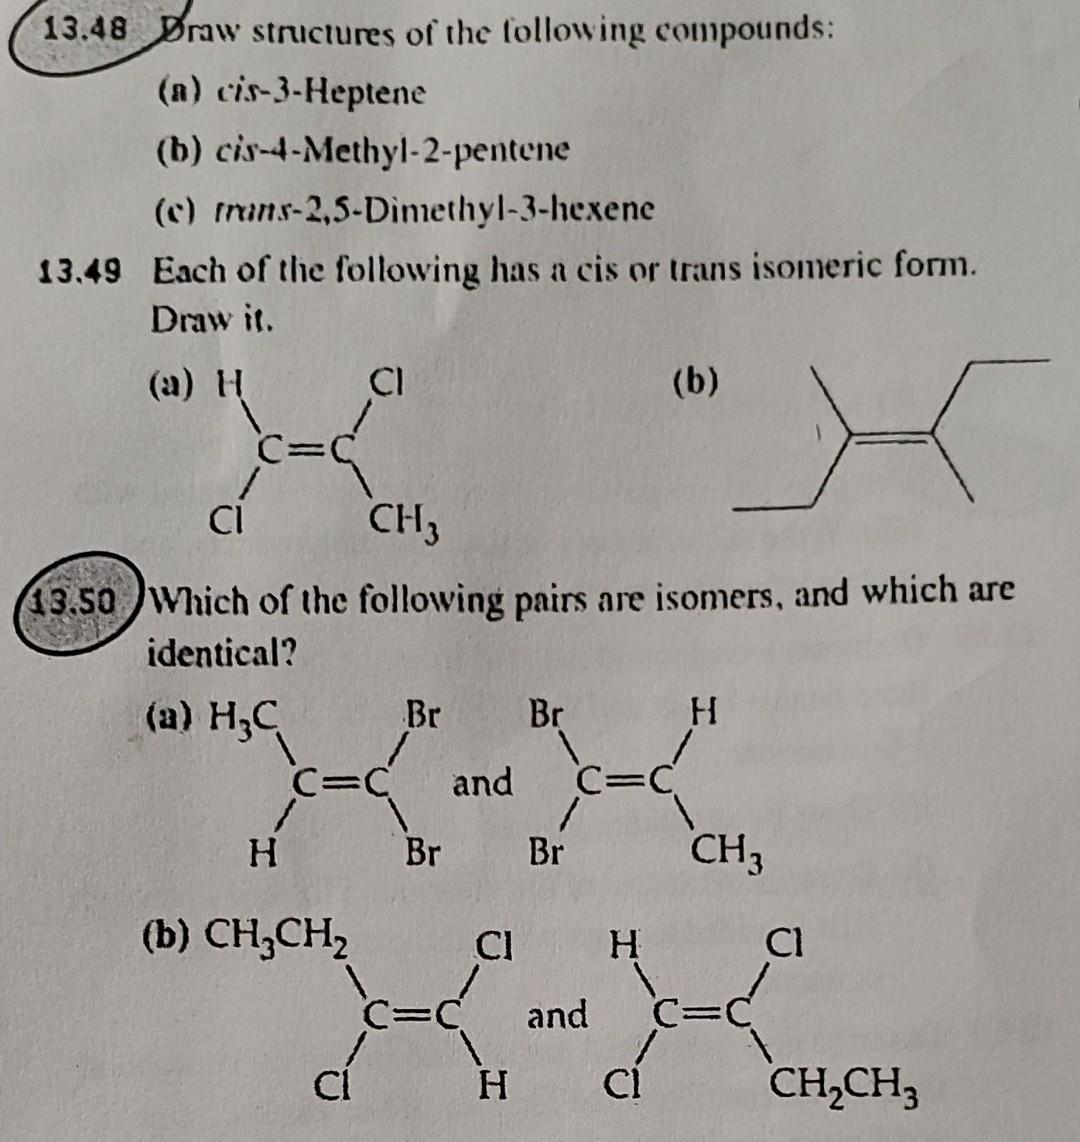 hexene isomers